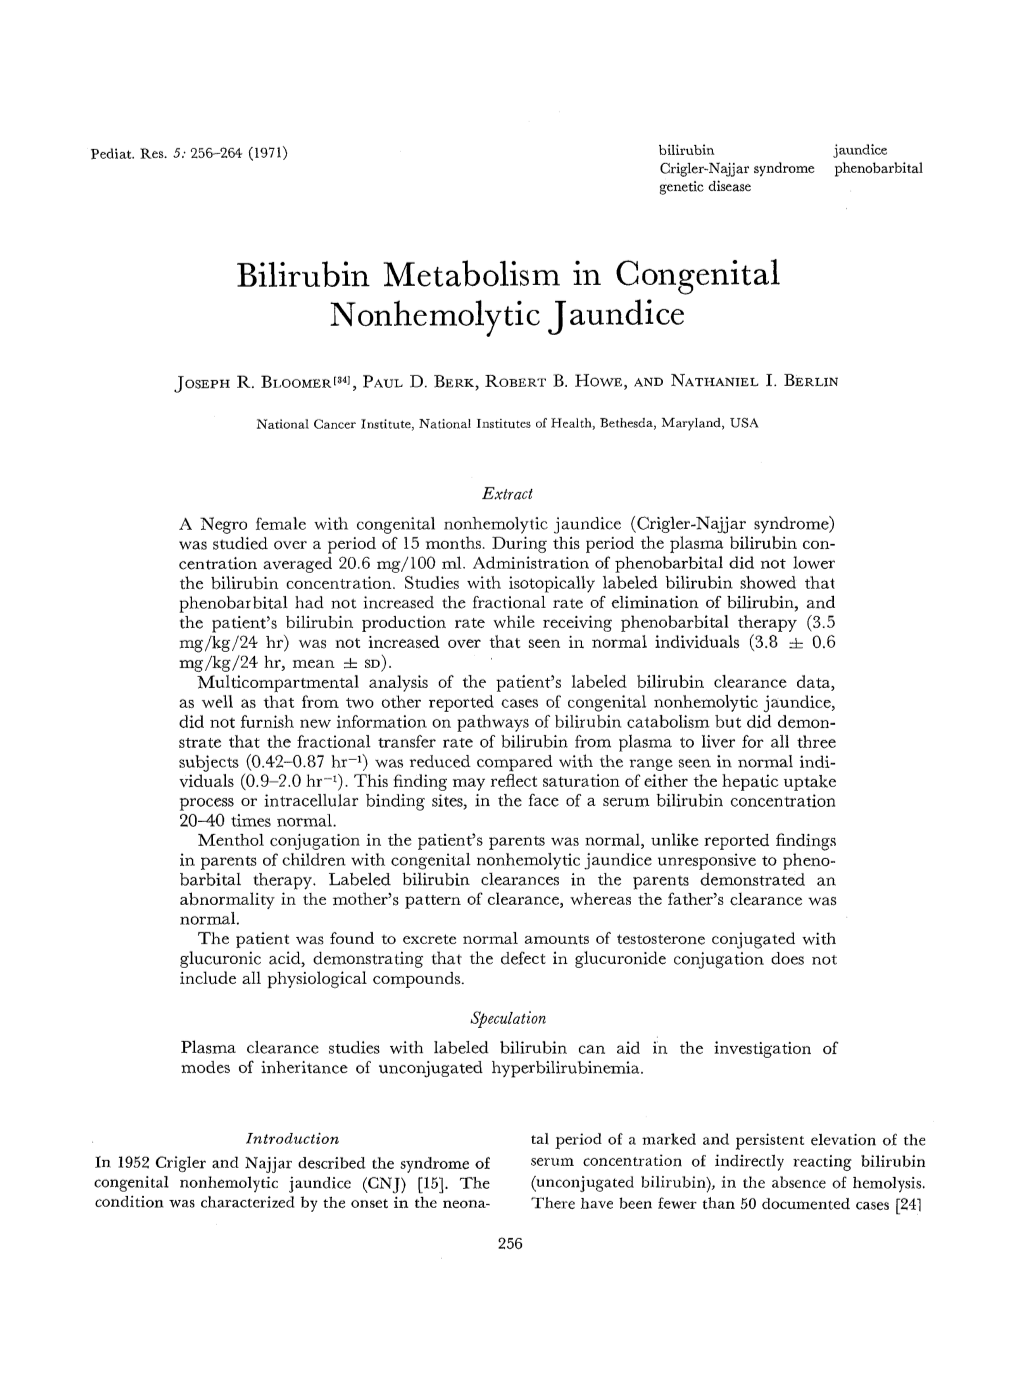 Bilirubin Metabolism in Congenital Nonhemolytic Jaundice